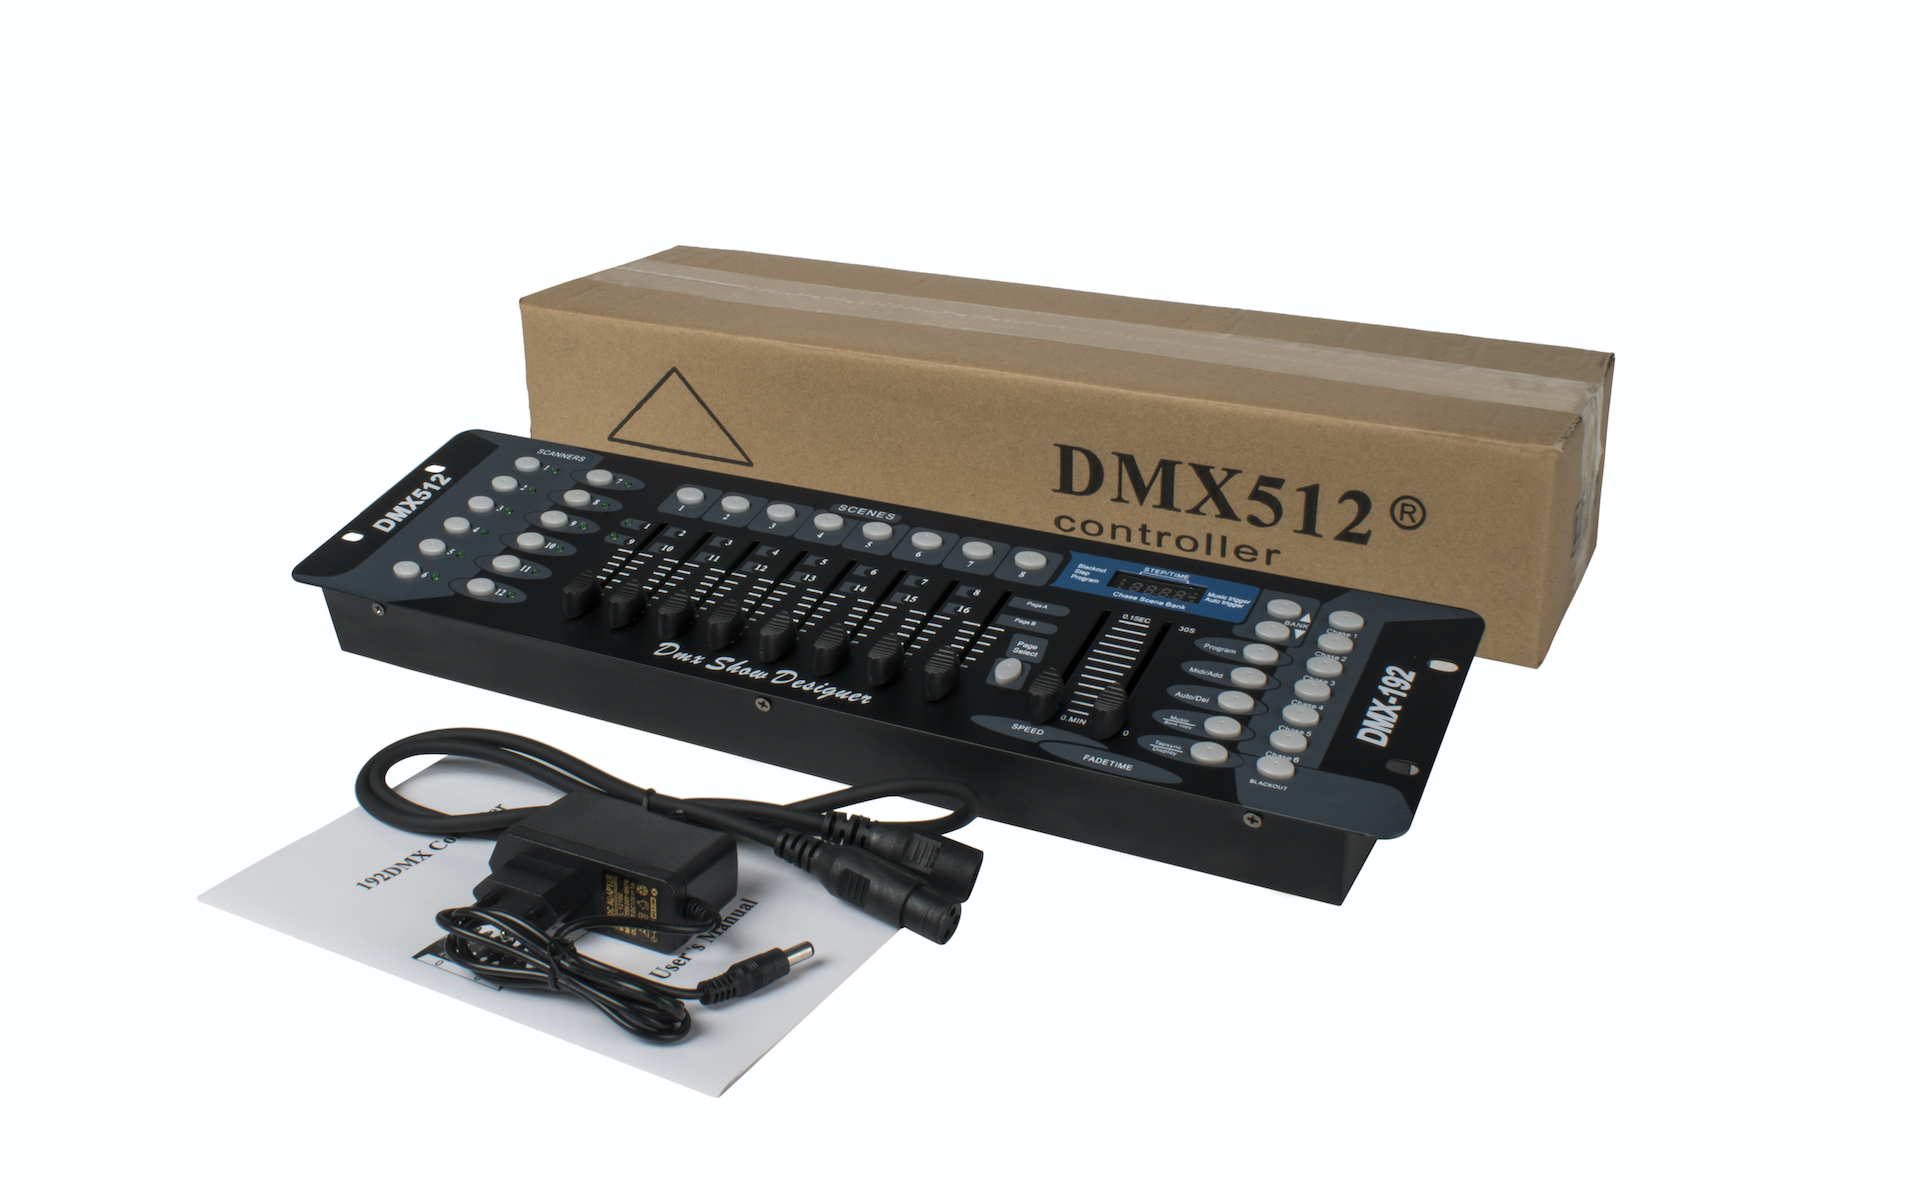 Sonido Live DMX192 Stage Light DMX Controller Console